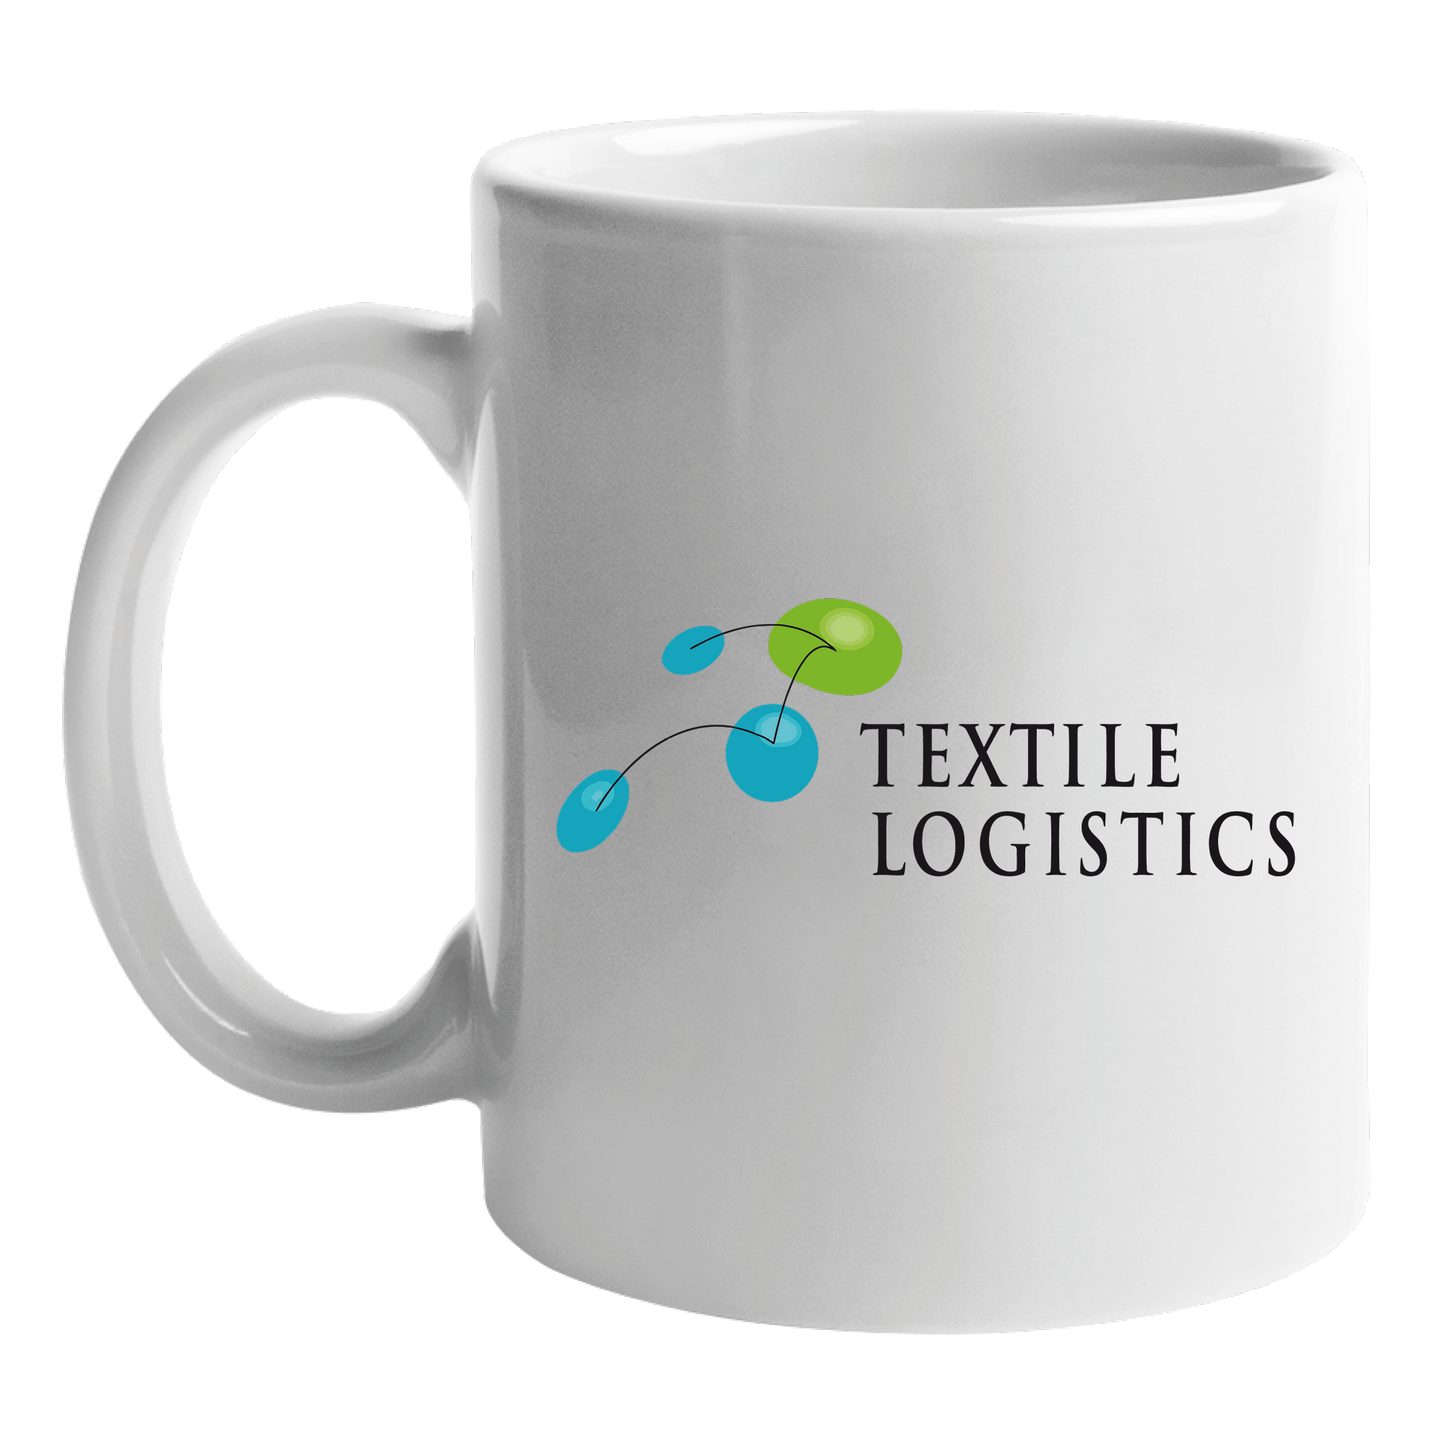 Kop med klub logo - Textile Logistics